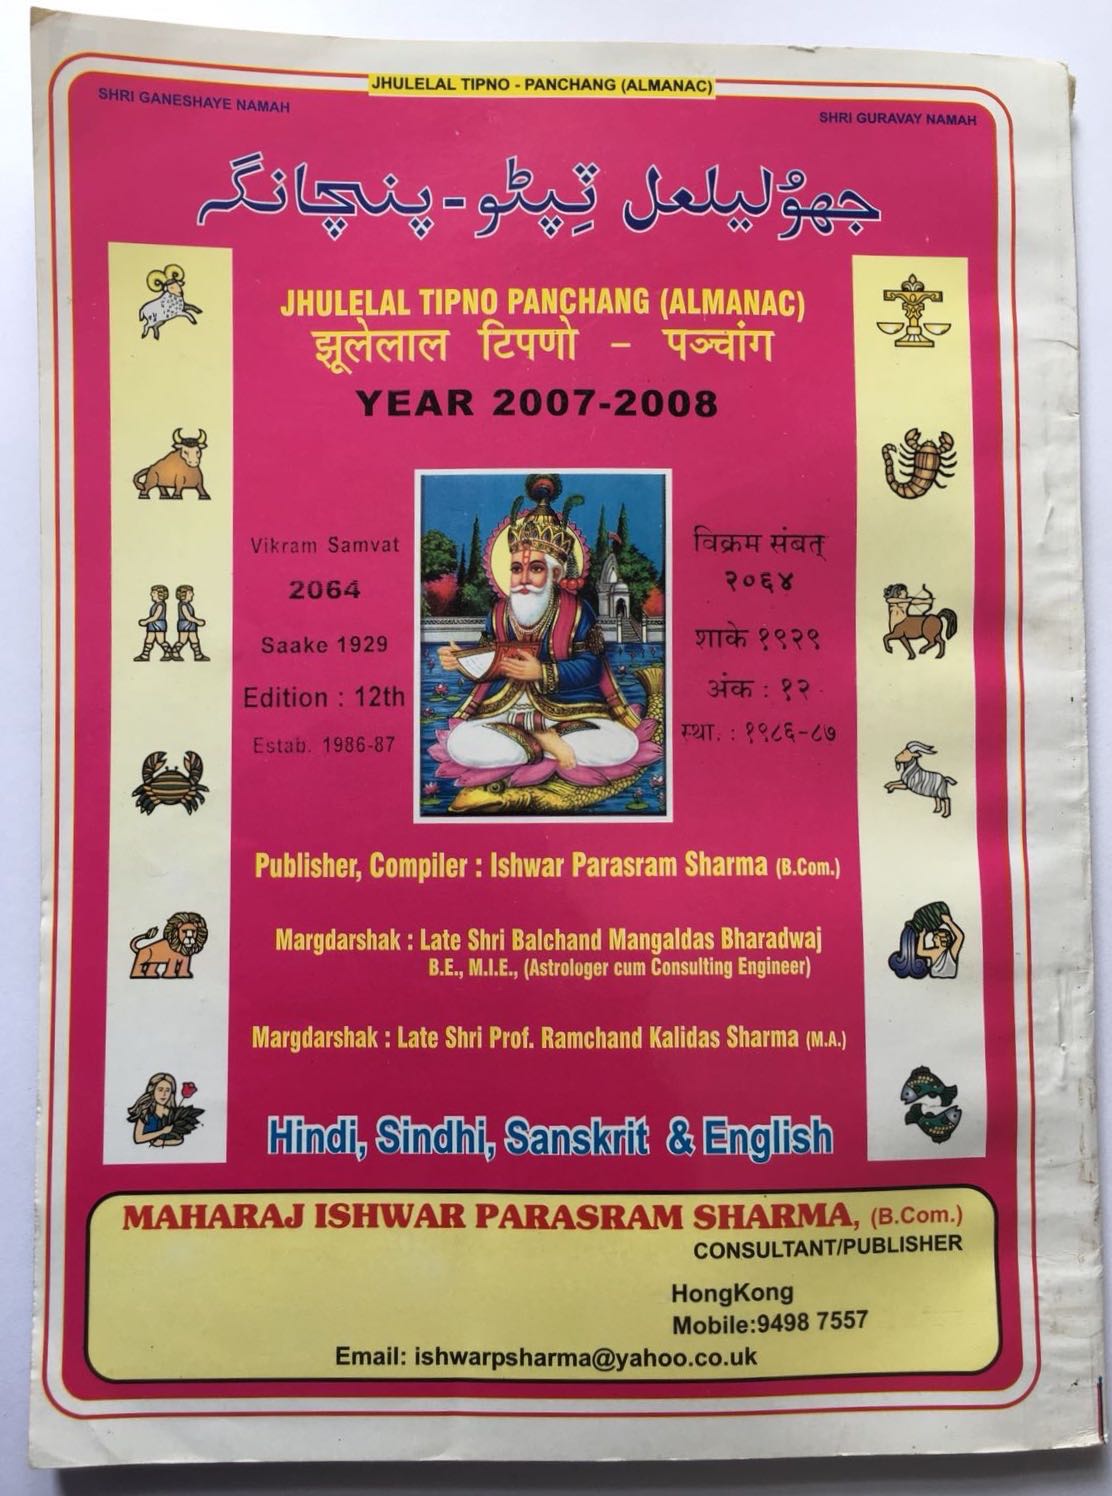 Jhulelal Tipno Panchang (Almanac) Year 2007-2008 compiled by Ishwar Parsram Sharma in Hindi, Sindhi, Sanskrit and English -Top cover page Sindhi side